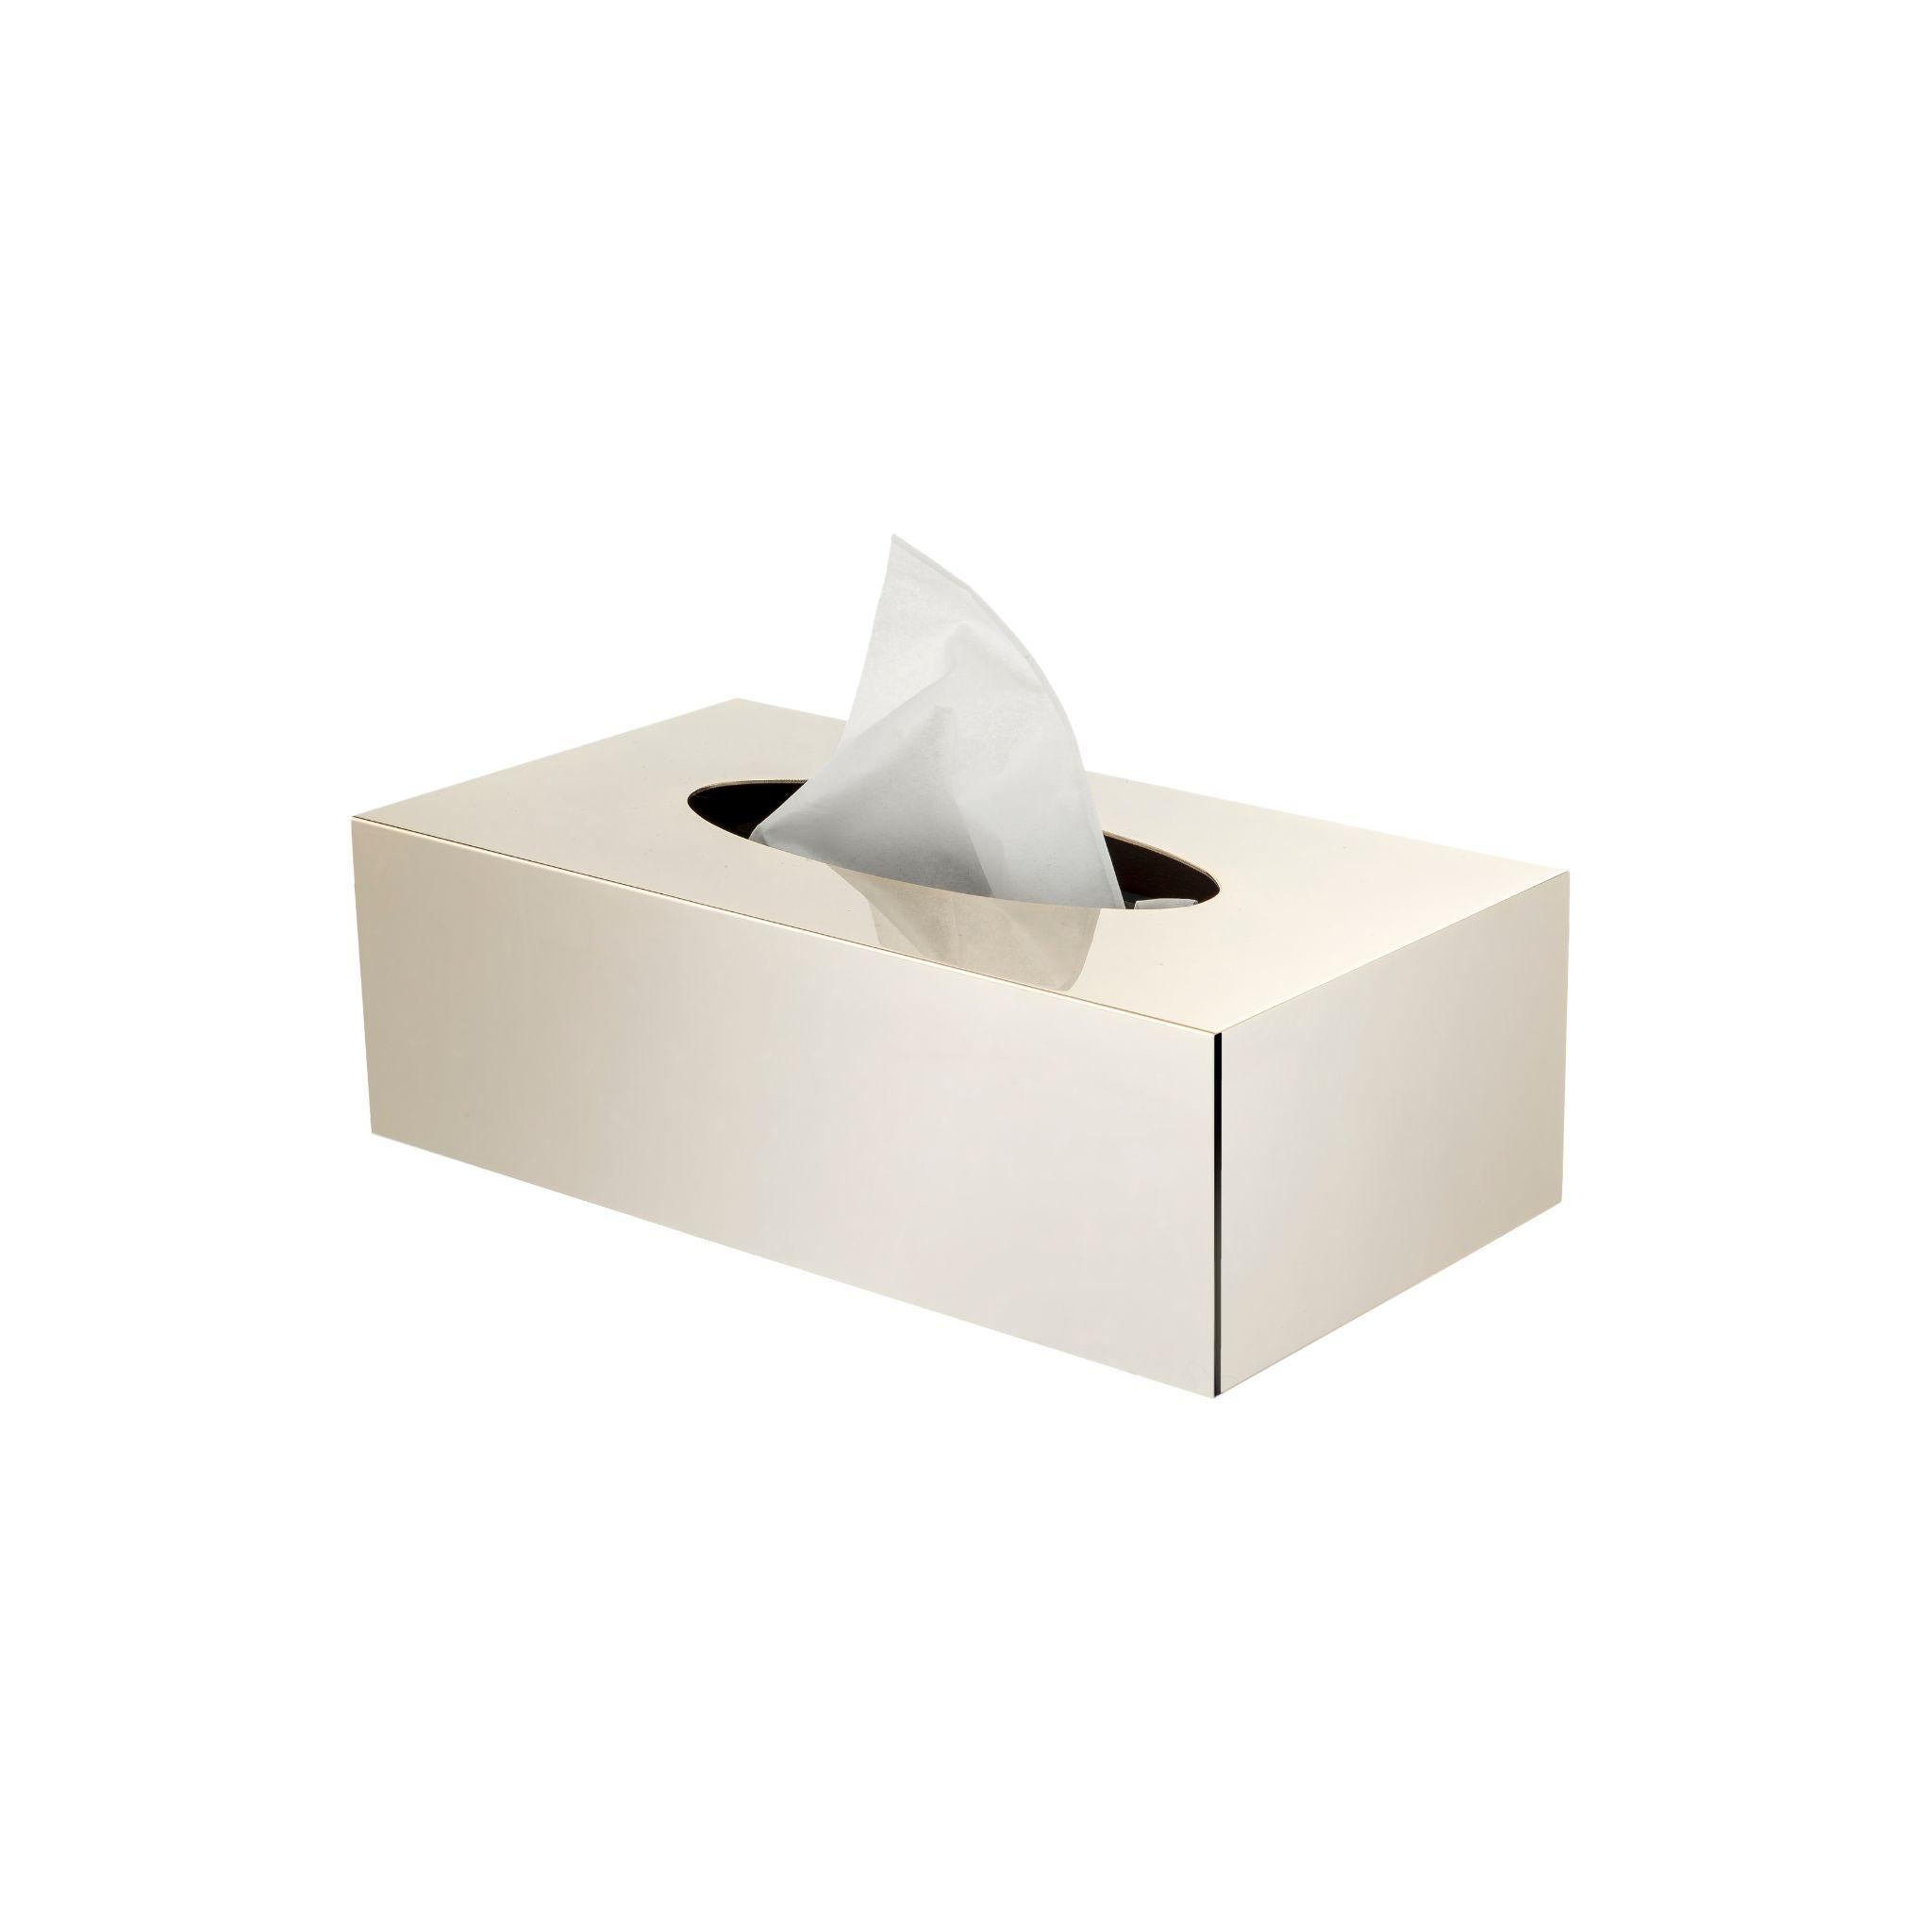 rectangle tissue box dimensions